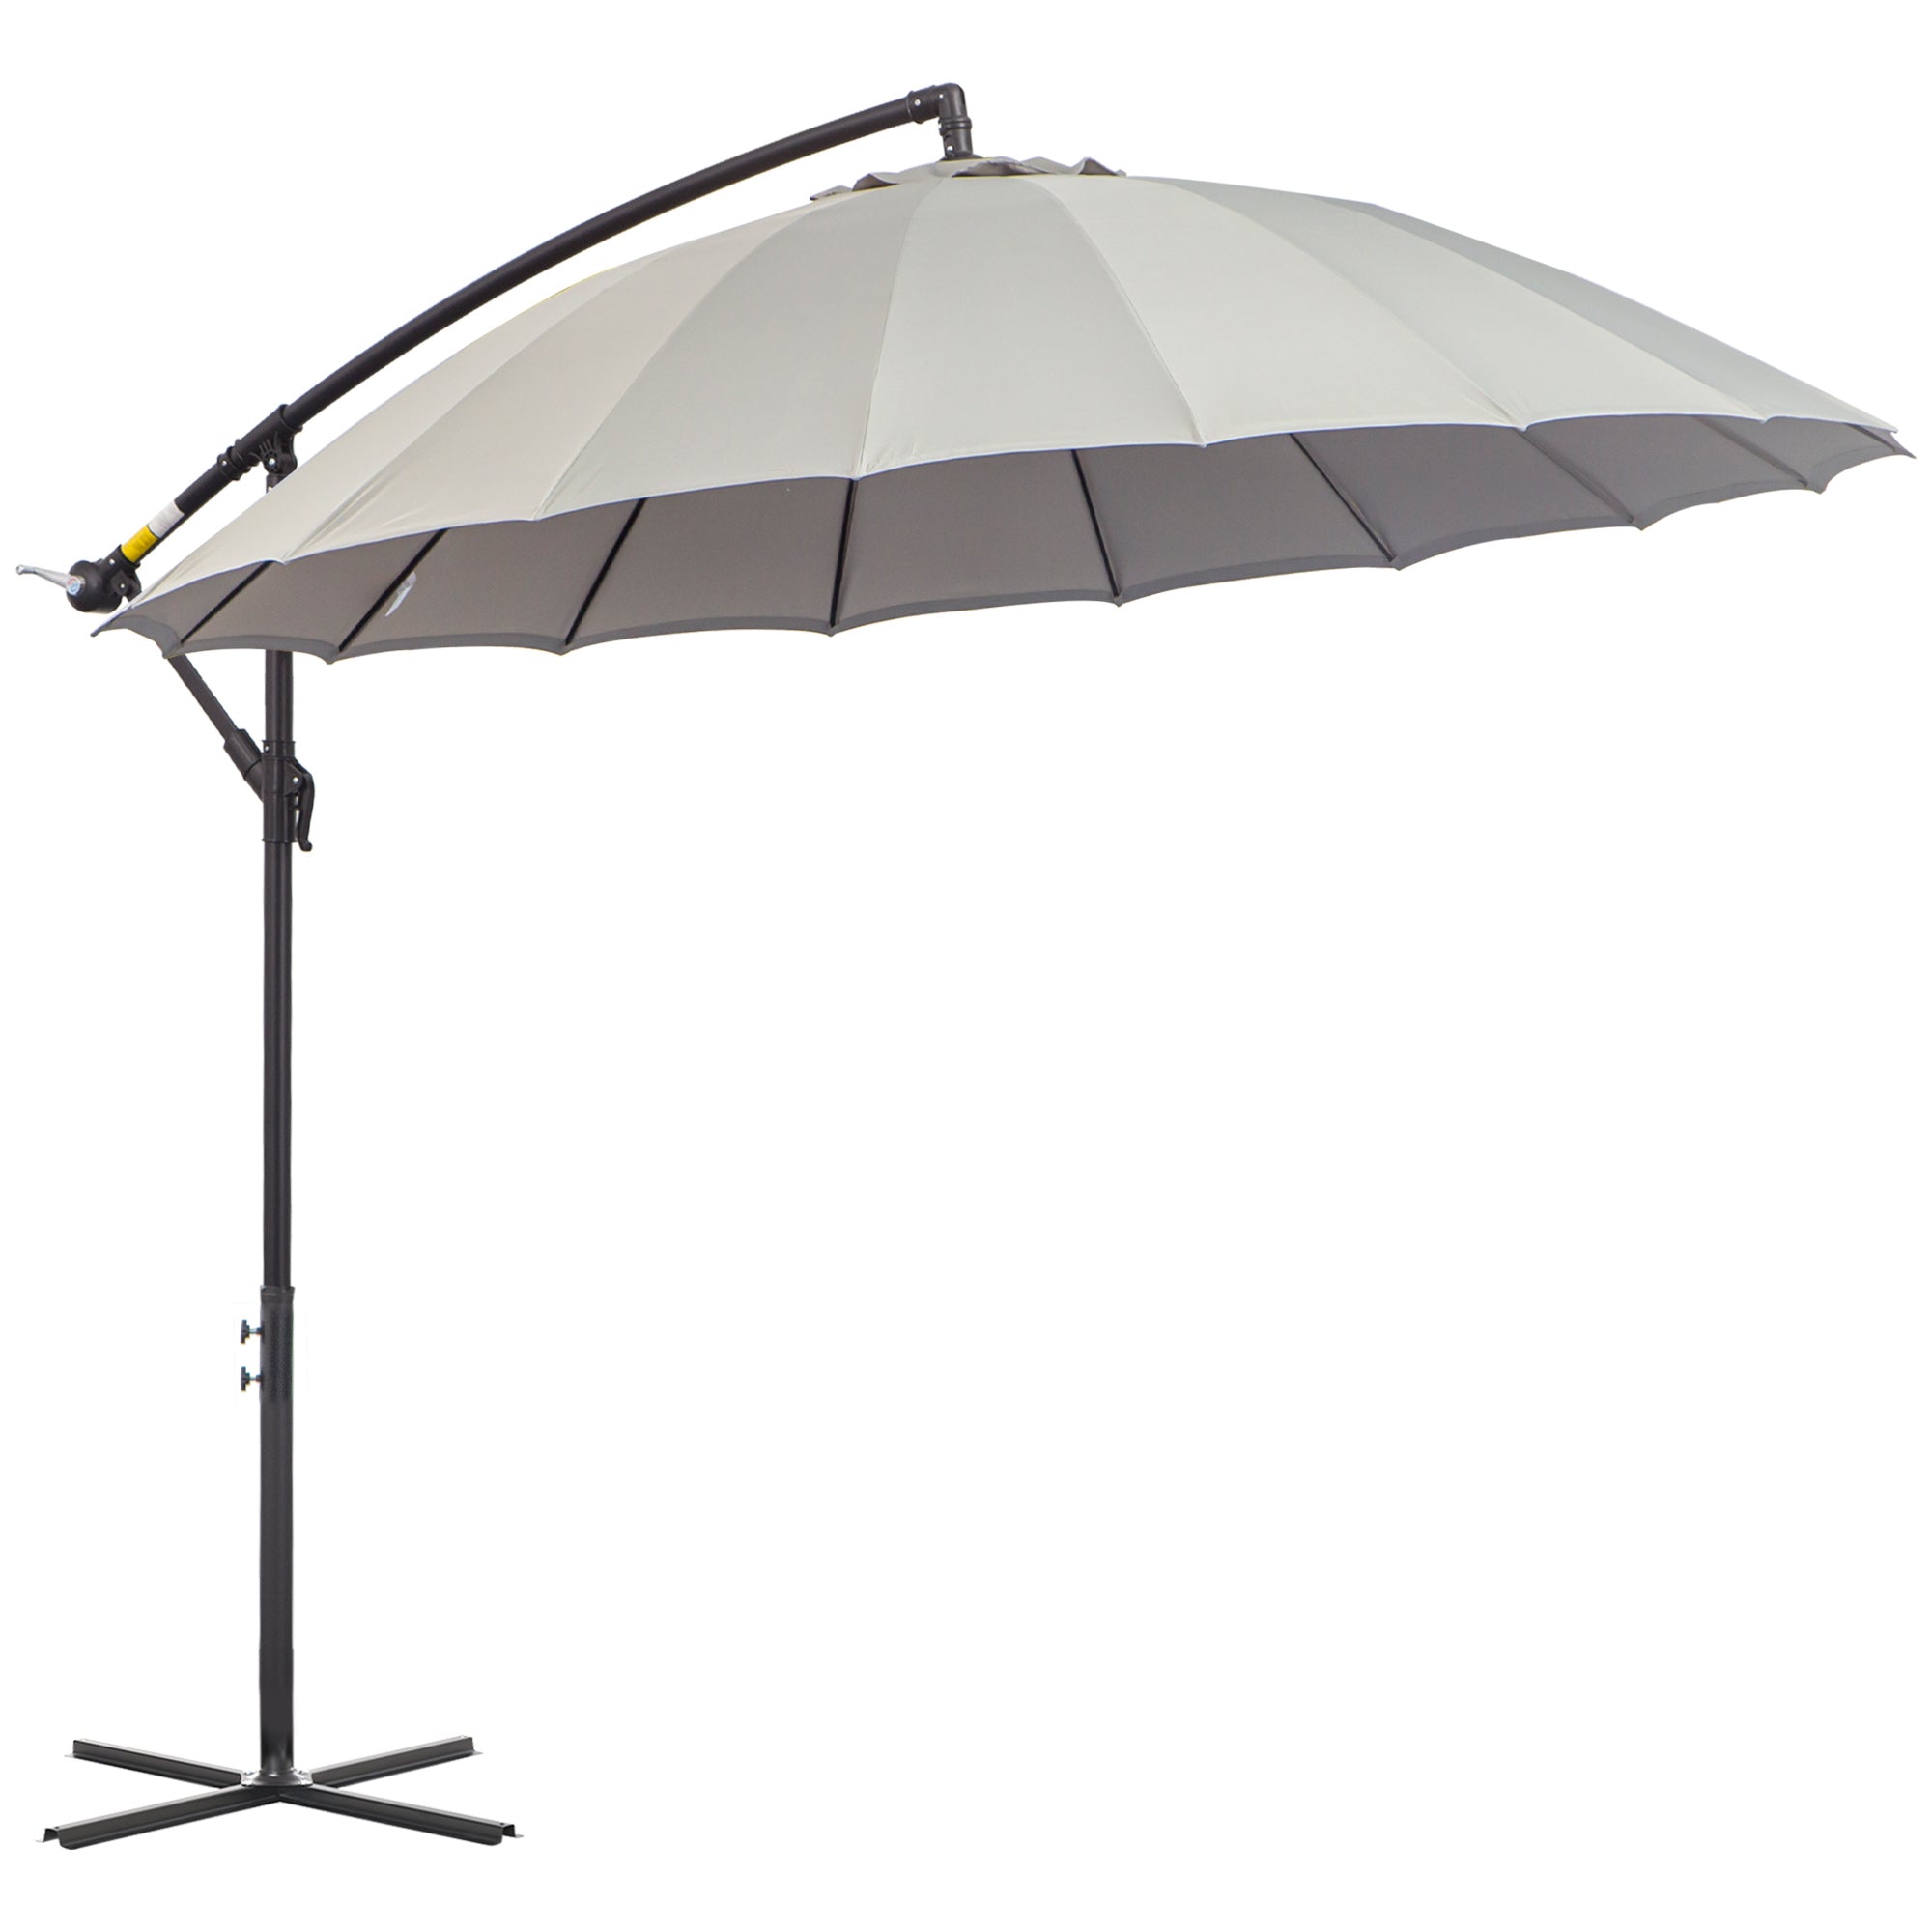 3(m) Cantilever Garden Hanging Banana Sun Umbrella with Crank Handle, 18 Sturdy Ribs and Cross Base, Grey-0